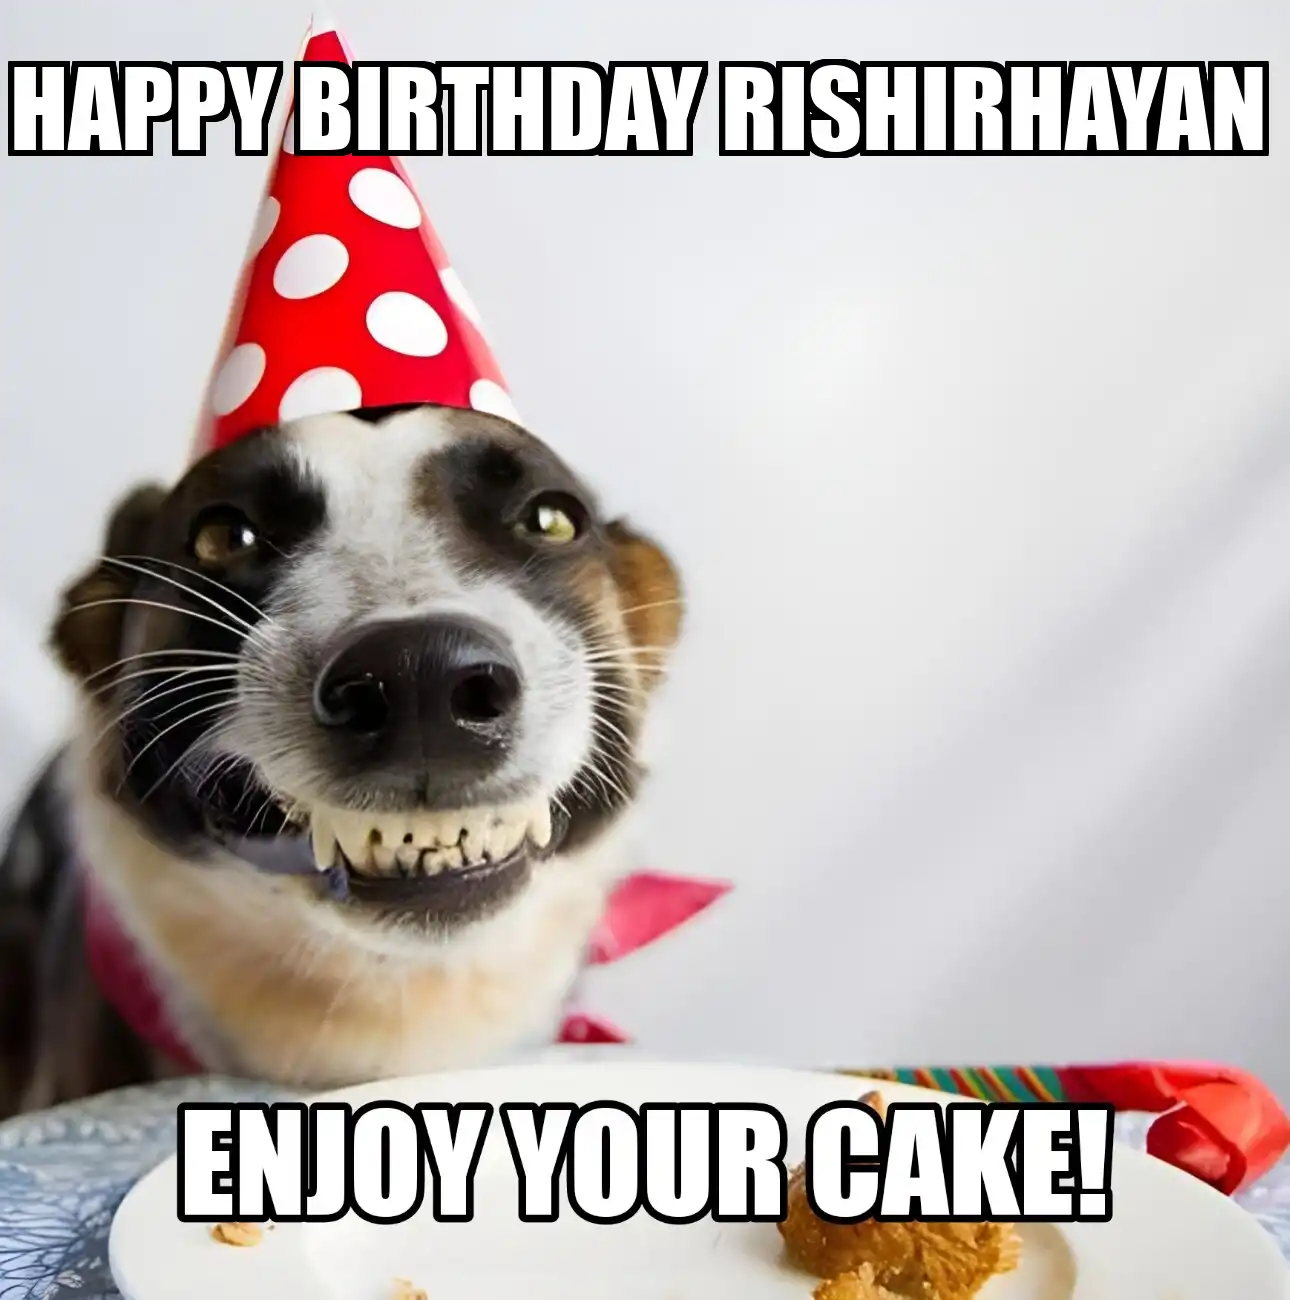 Happy Birthday Rishirhayan Enjoy Your Cake Dog Meme